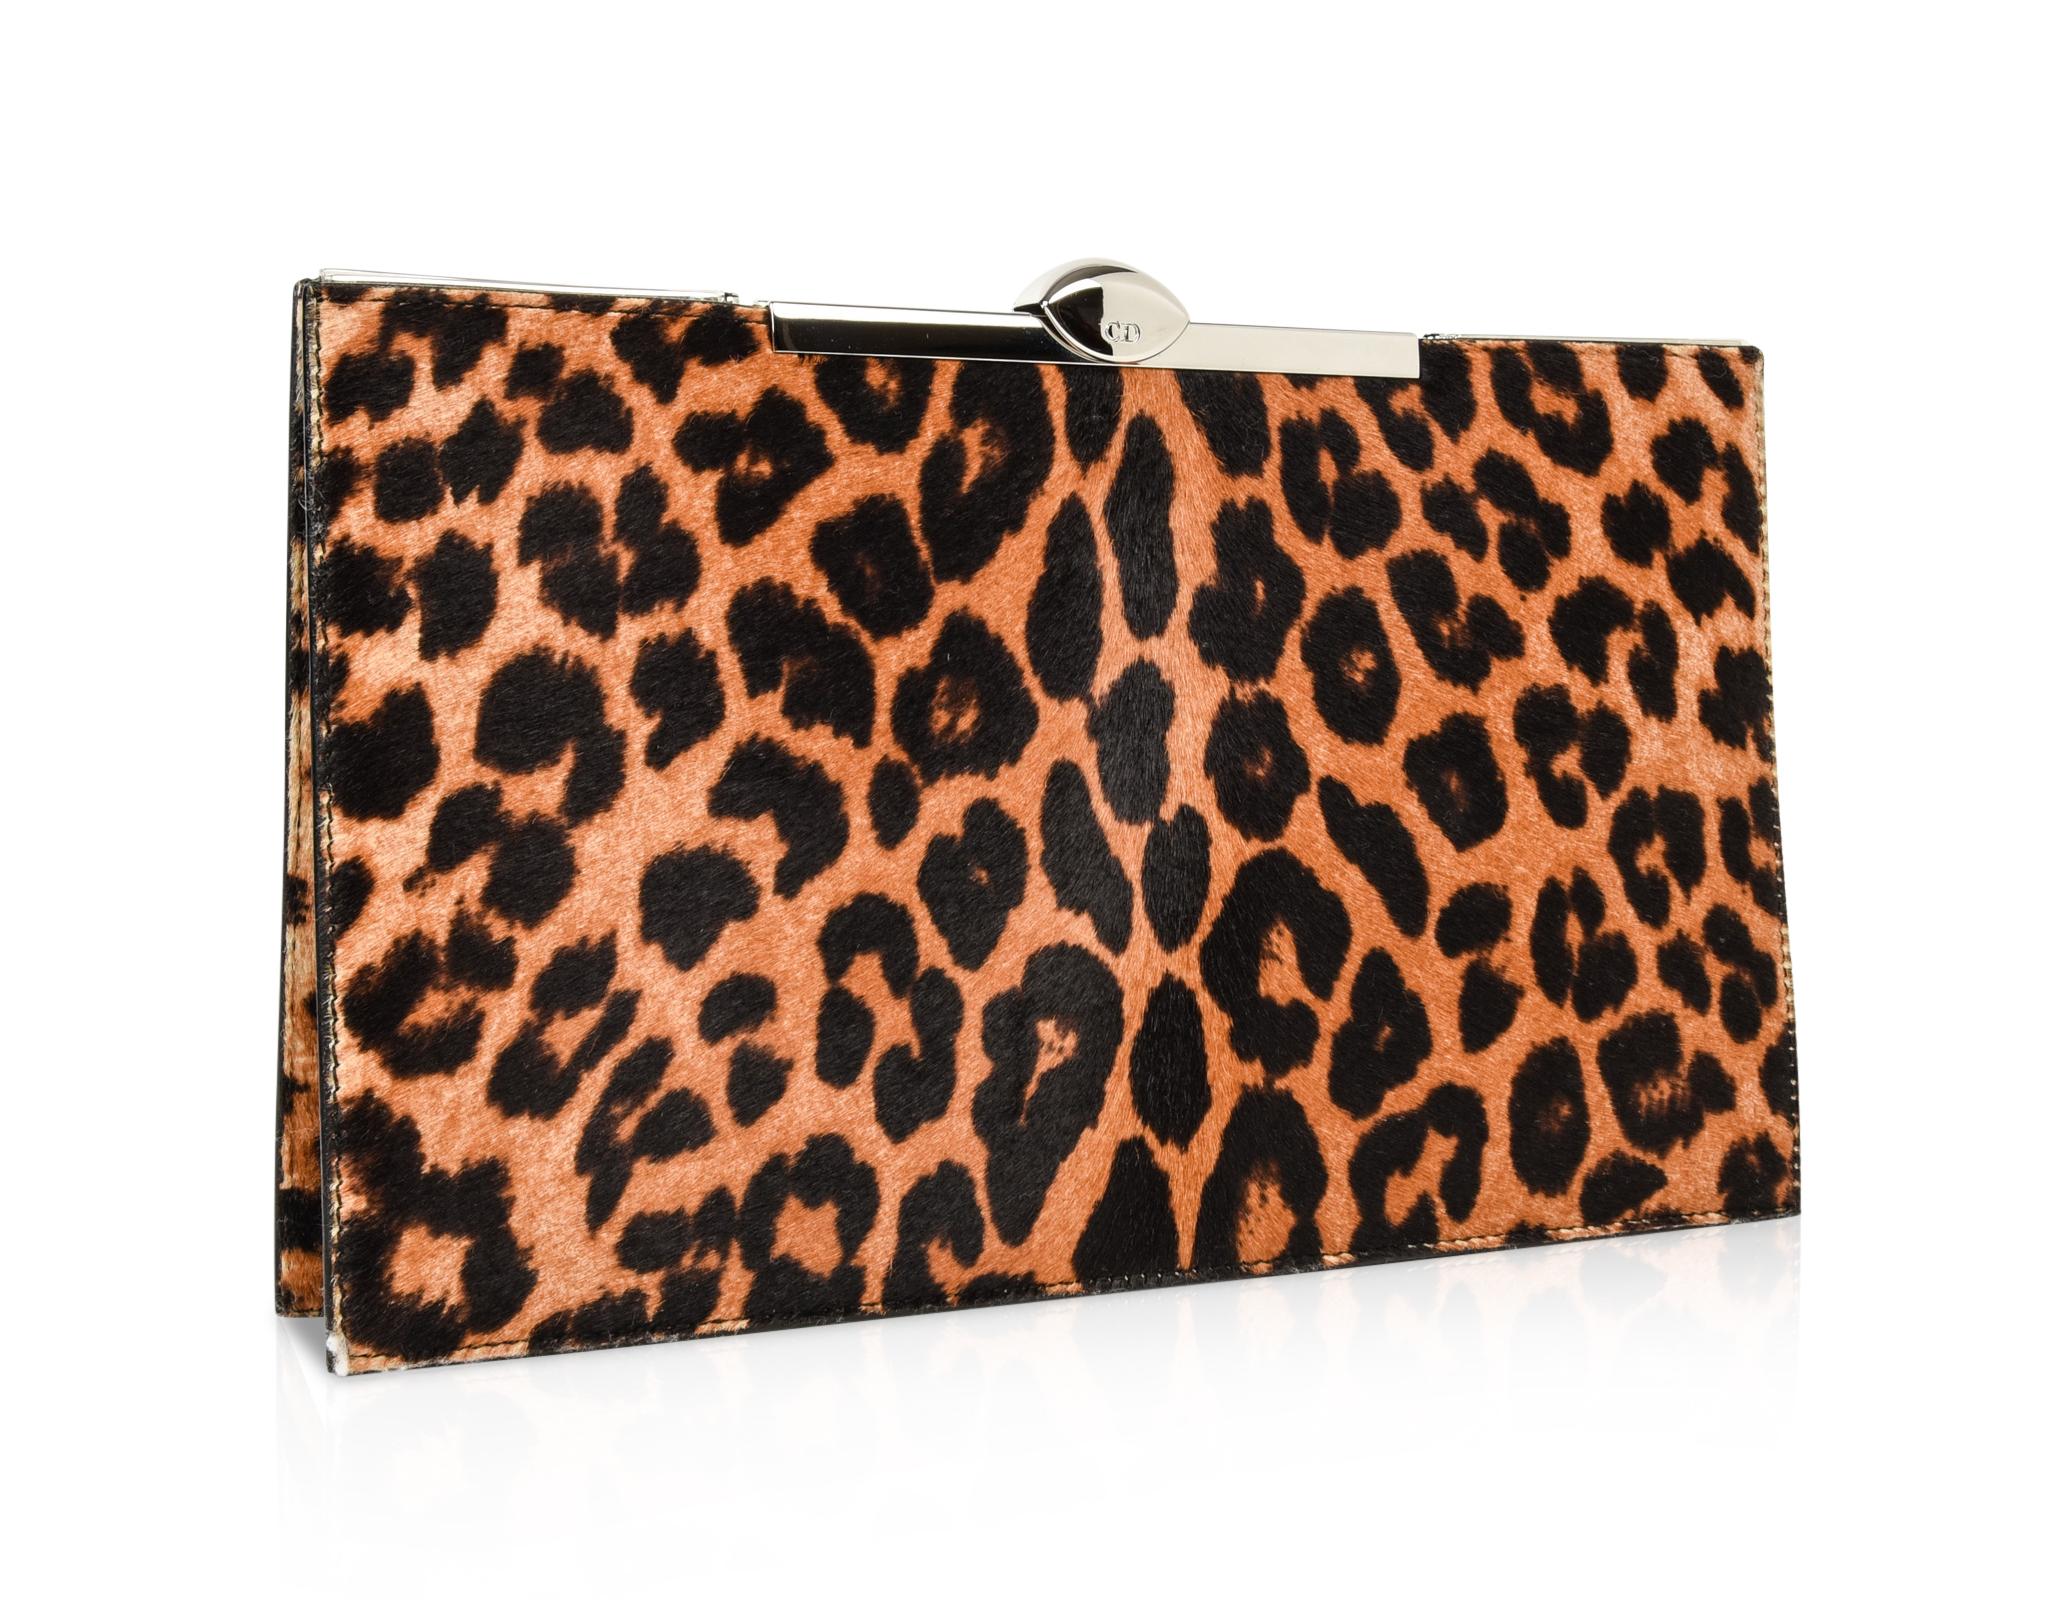 Black Christian Dior Bag Clutch Leopard Print Pony Top Frame Sleek